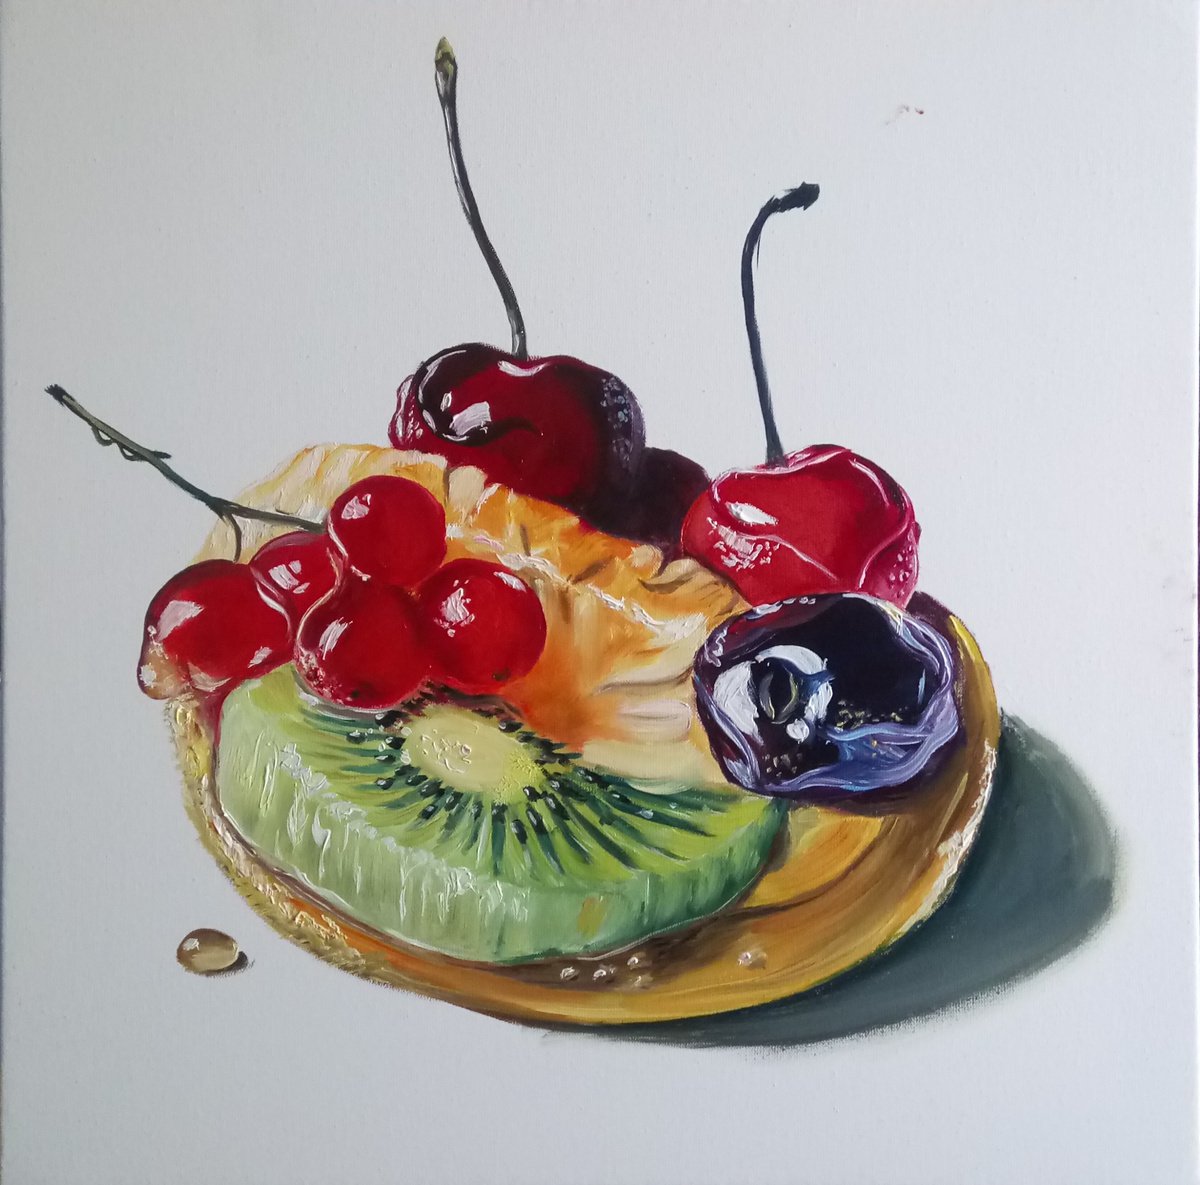 Tartlet with fruits in syrup by Valeriia Radziievska